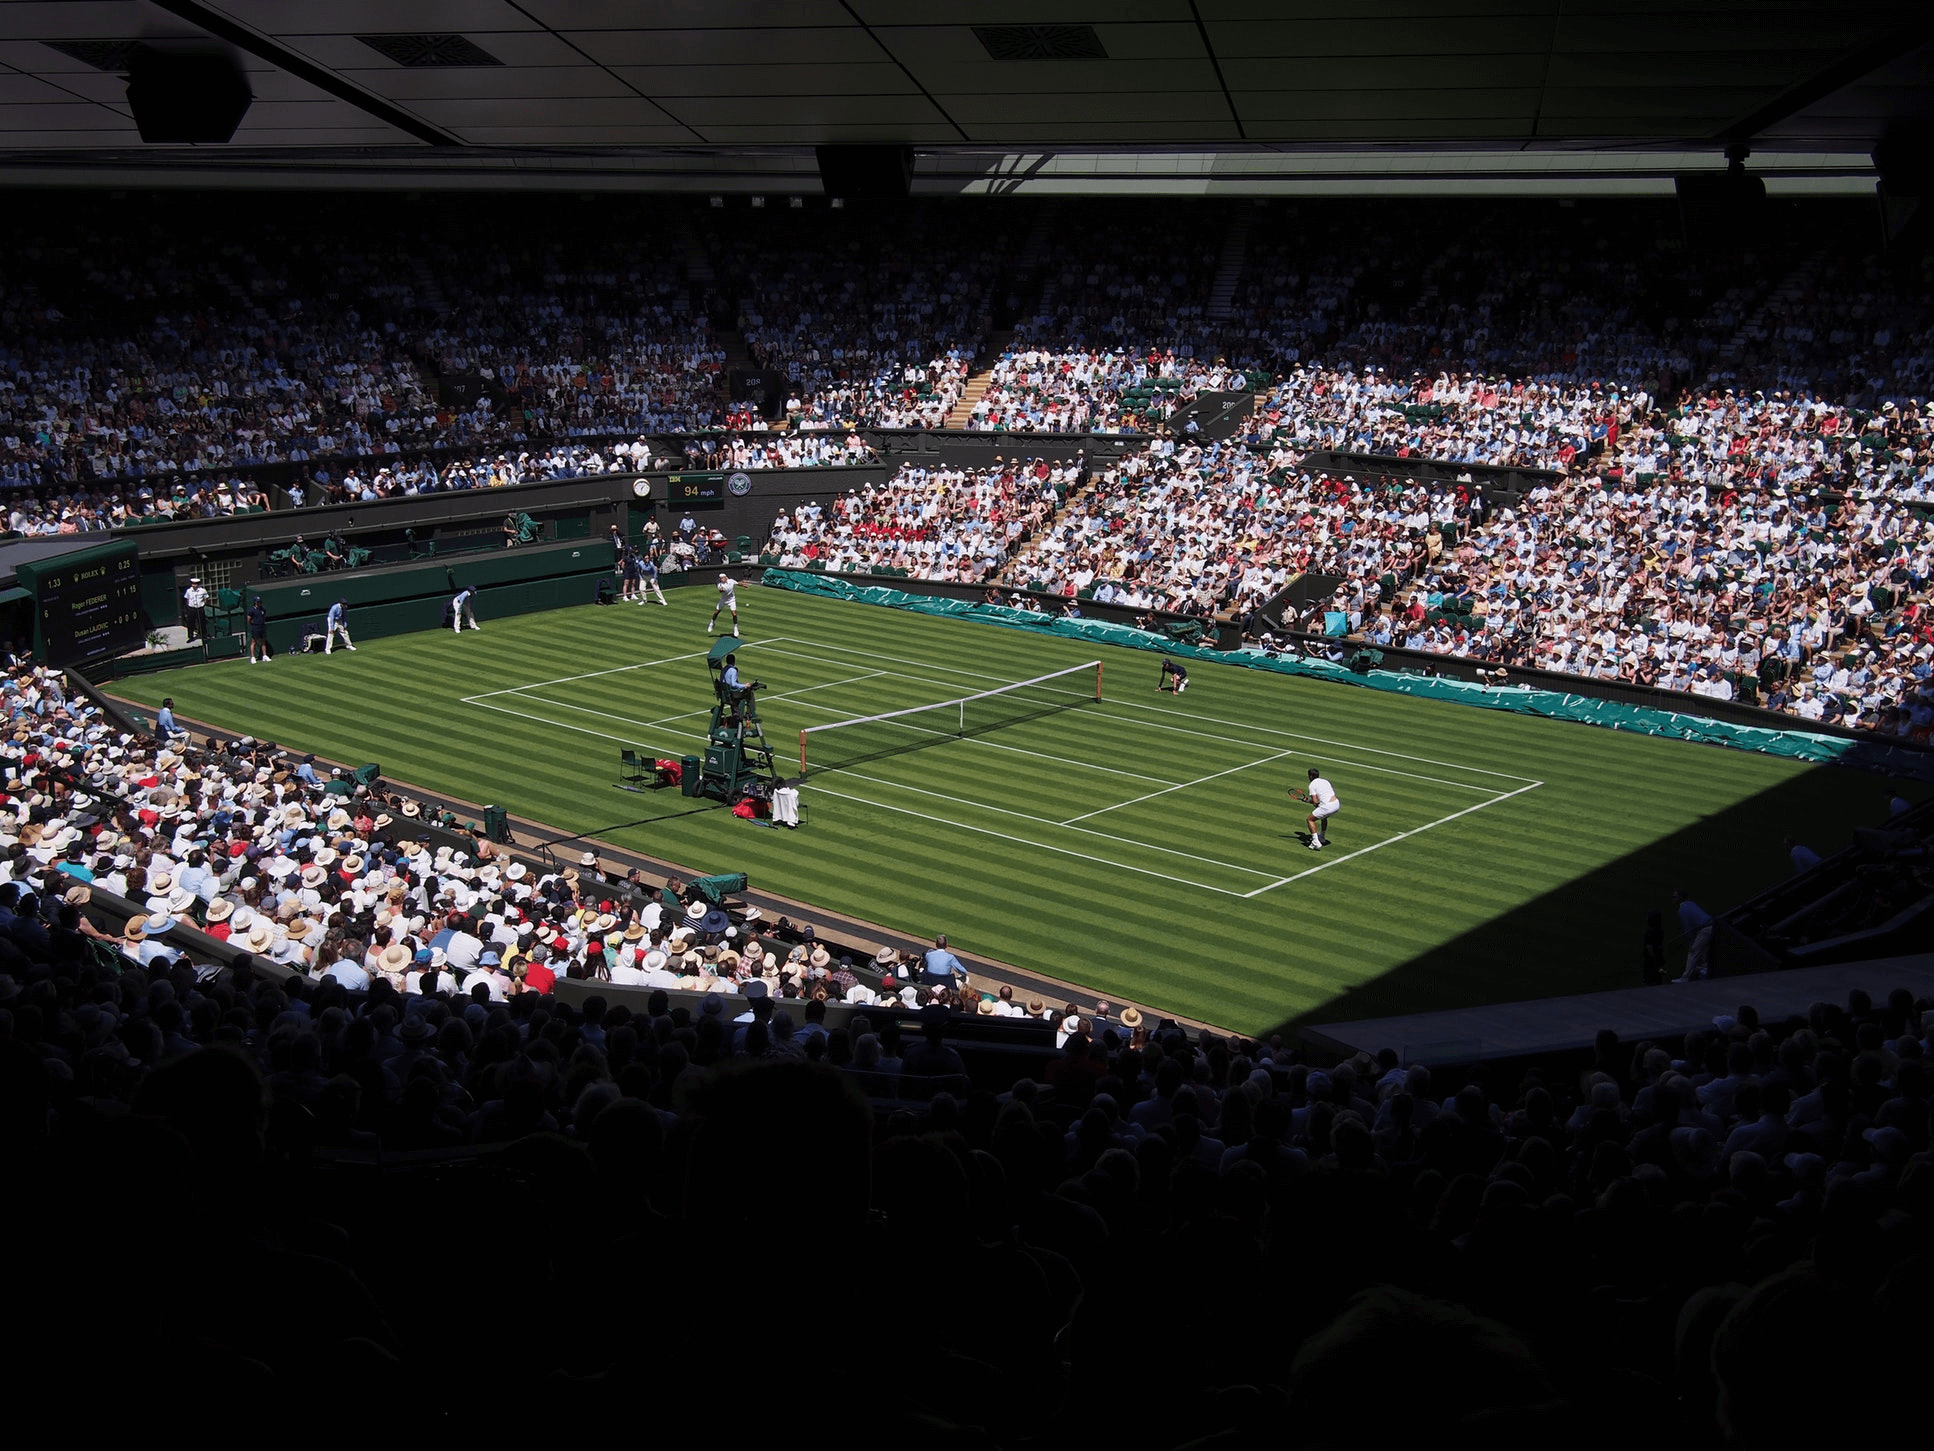 Wimbledon Tennis Championship